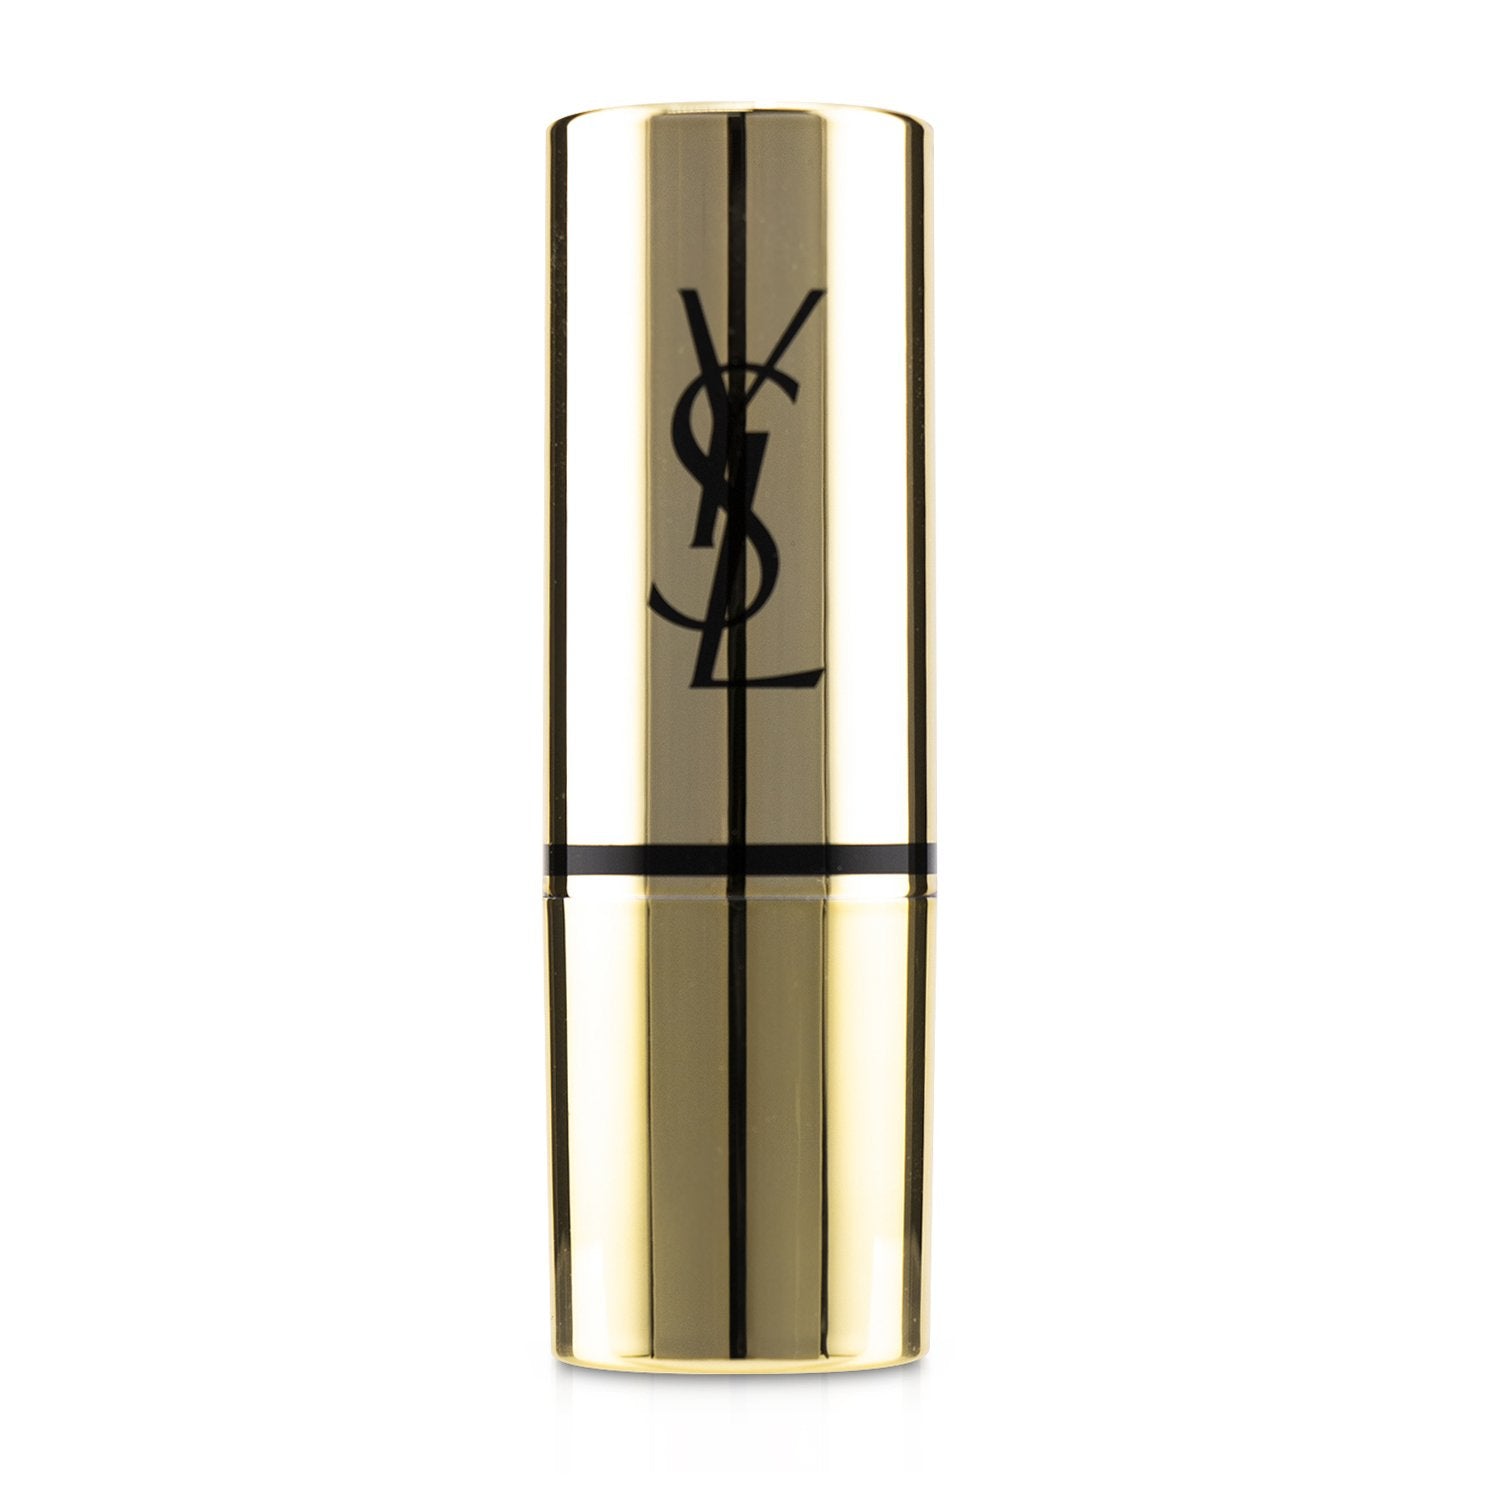 Eclat Shimmer Stick Illuminating Highlighter for Sale | Yves Saint Laurent, Make Up, Buy Now – Author